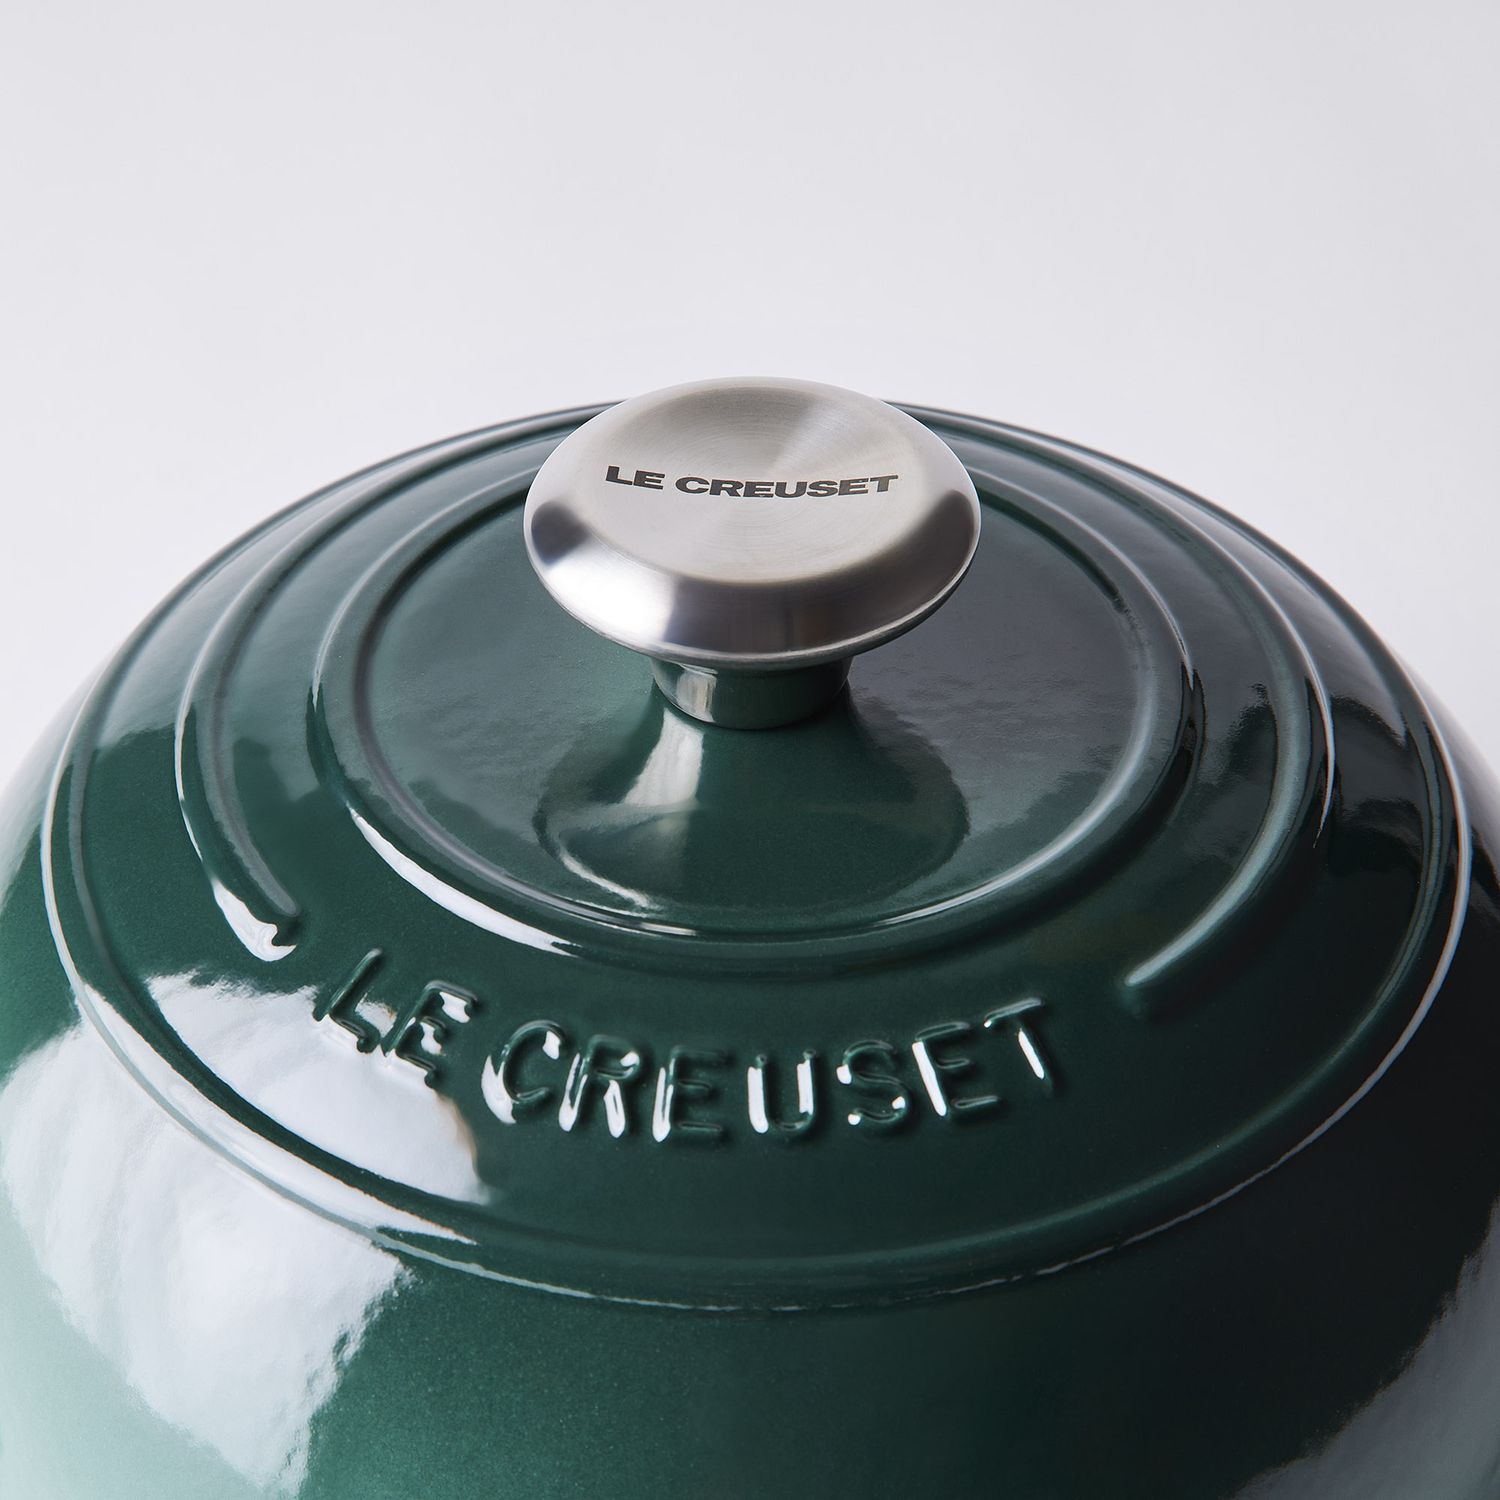 Le Creuset Signature Enameled Cast Iron Sauteuse Oven, 3.5-Quart, 4 Colors  on Food52